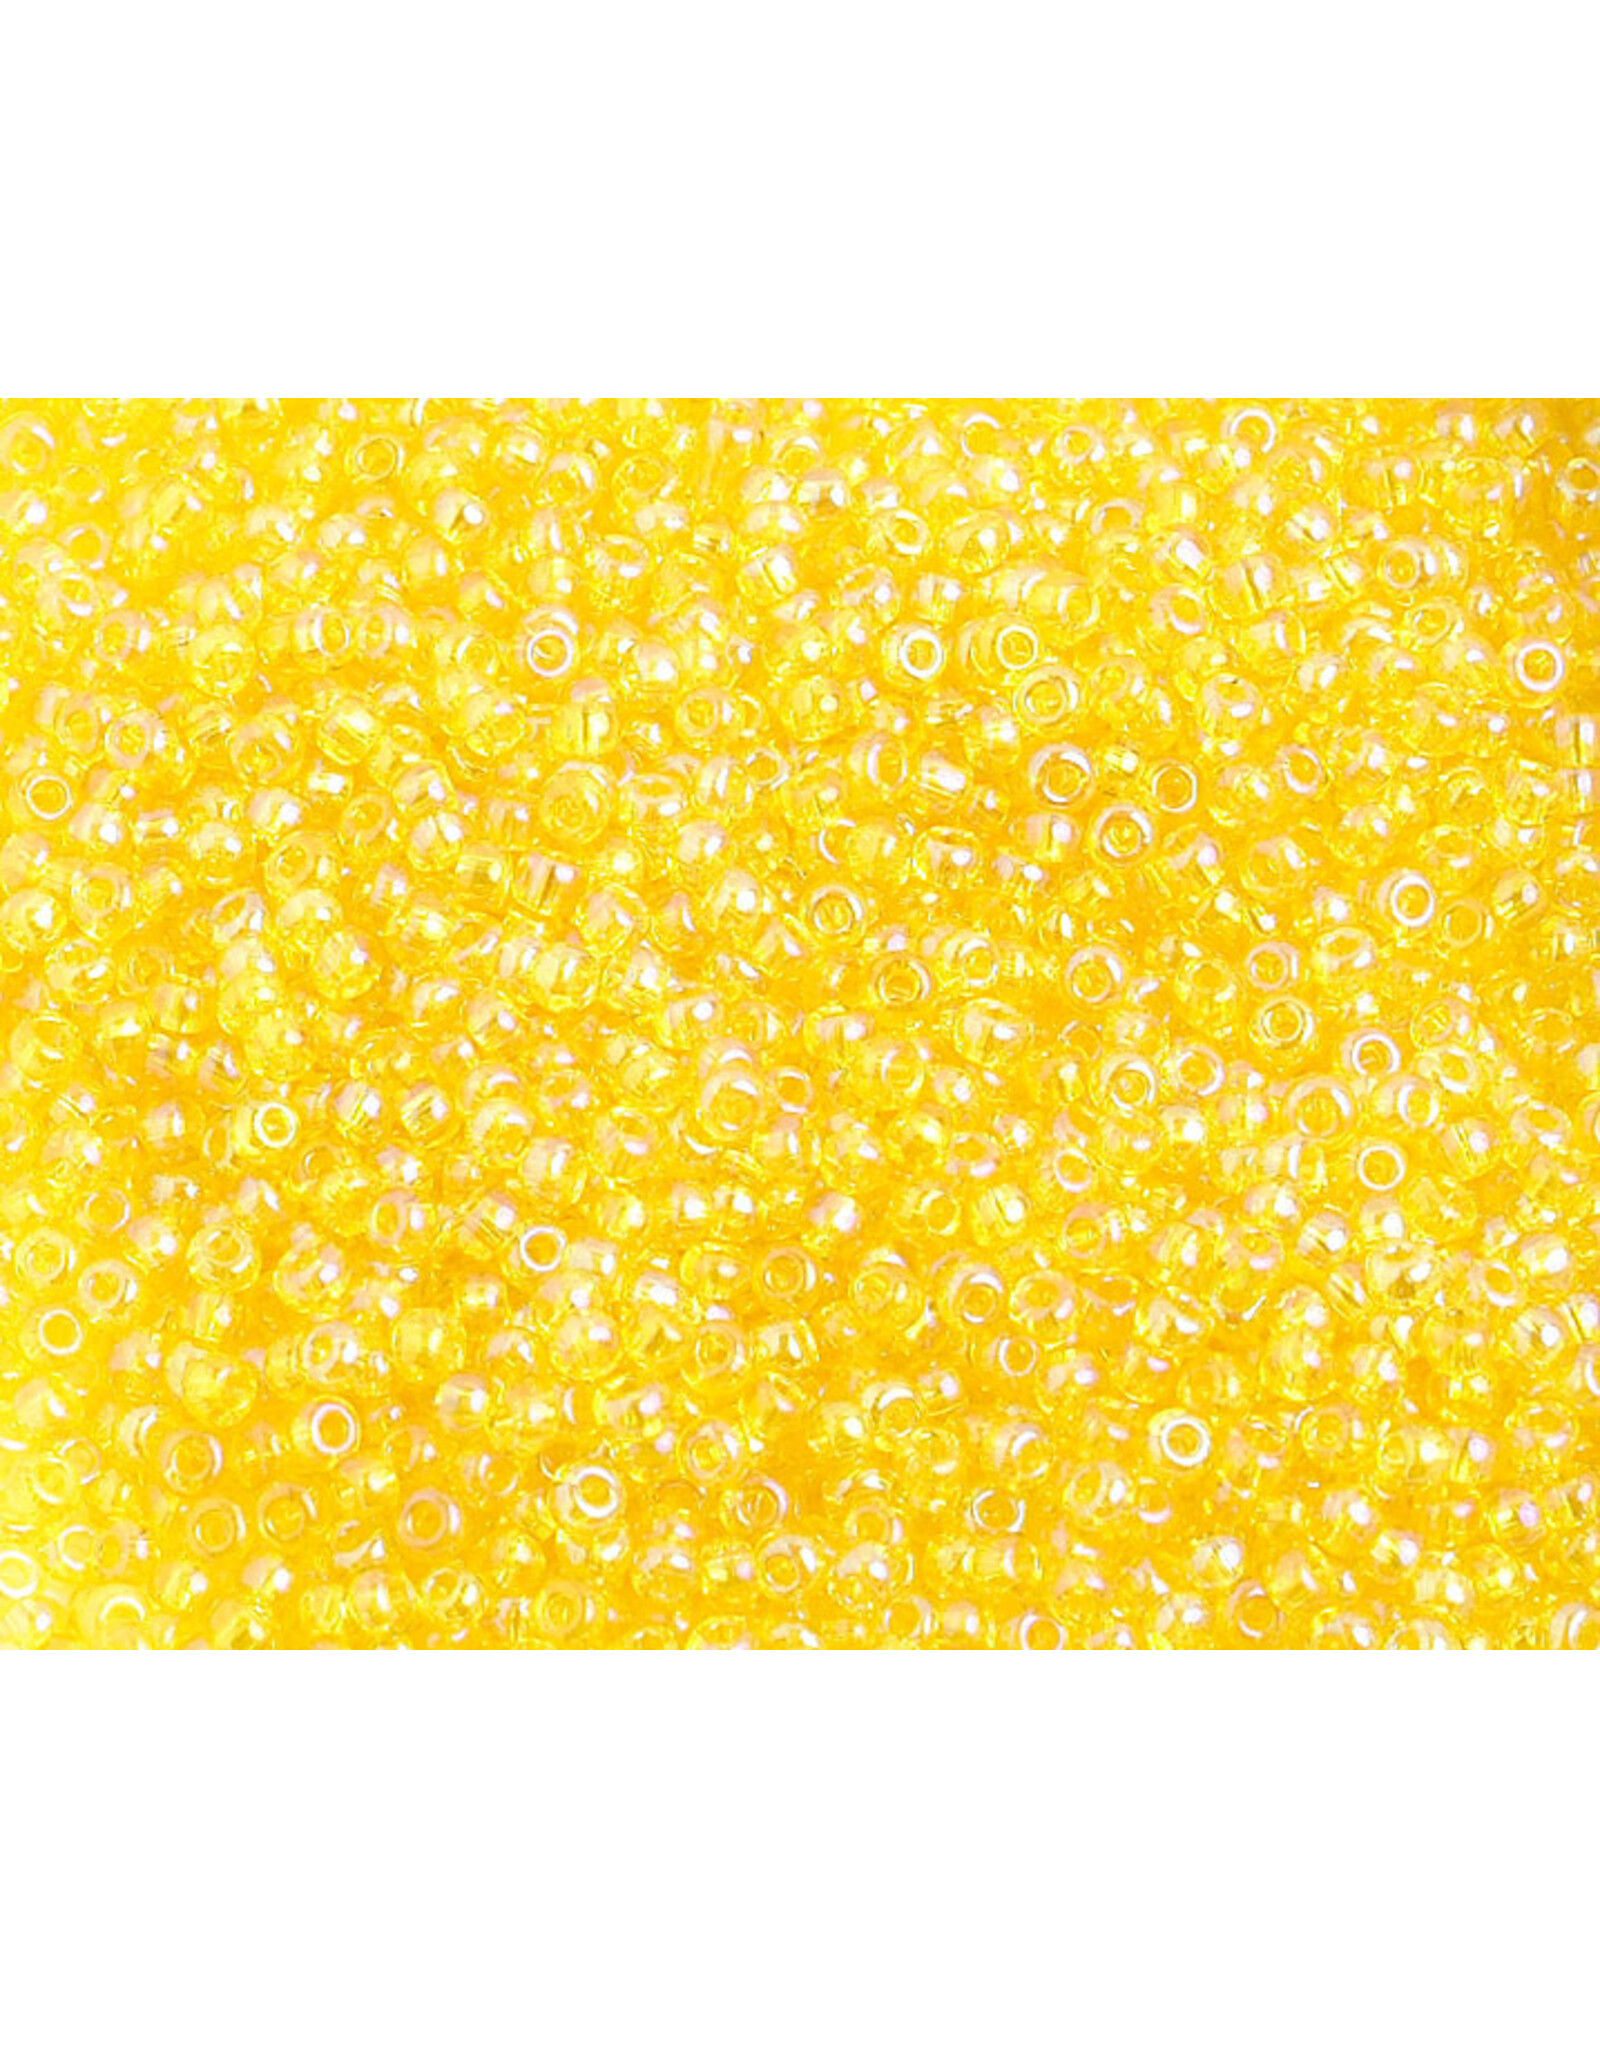 1244B  10  Seed  125g  Transparent Yellow AB